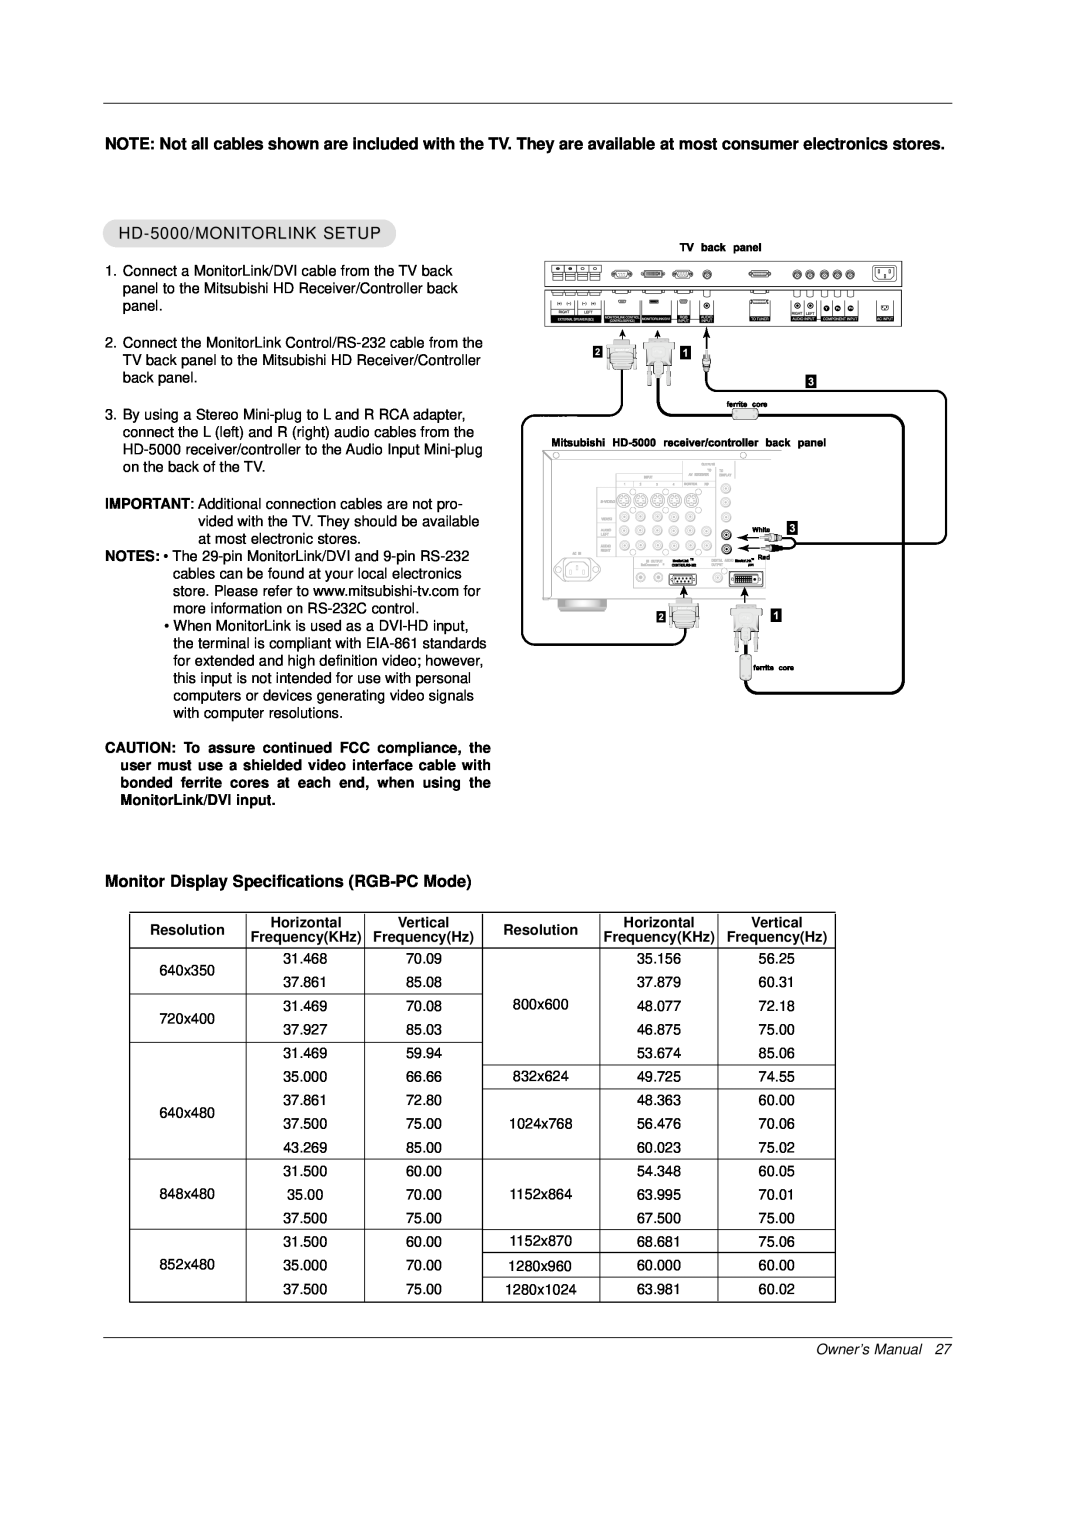 Mitsubishi Electronics PD-4225S manual HD-5000/MONITORLINK SETUP, Monitor Display Specifications RGB-PC Mode, Resolution 